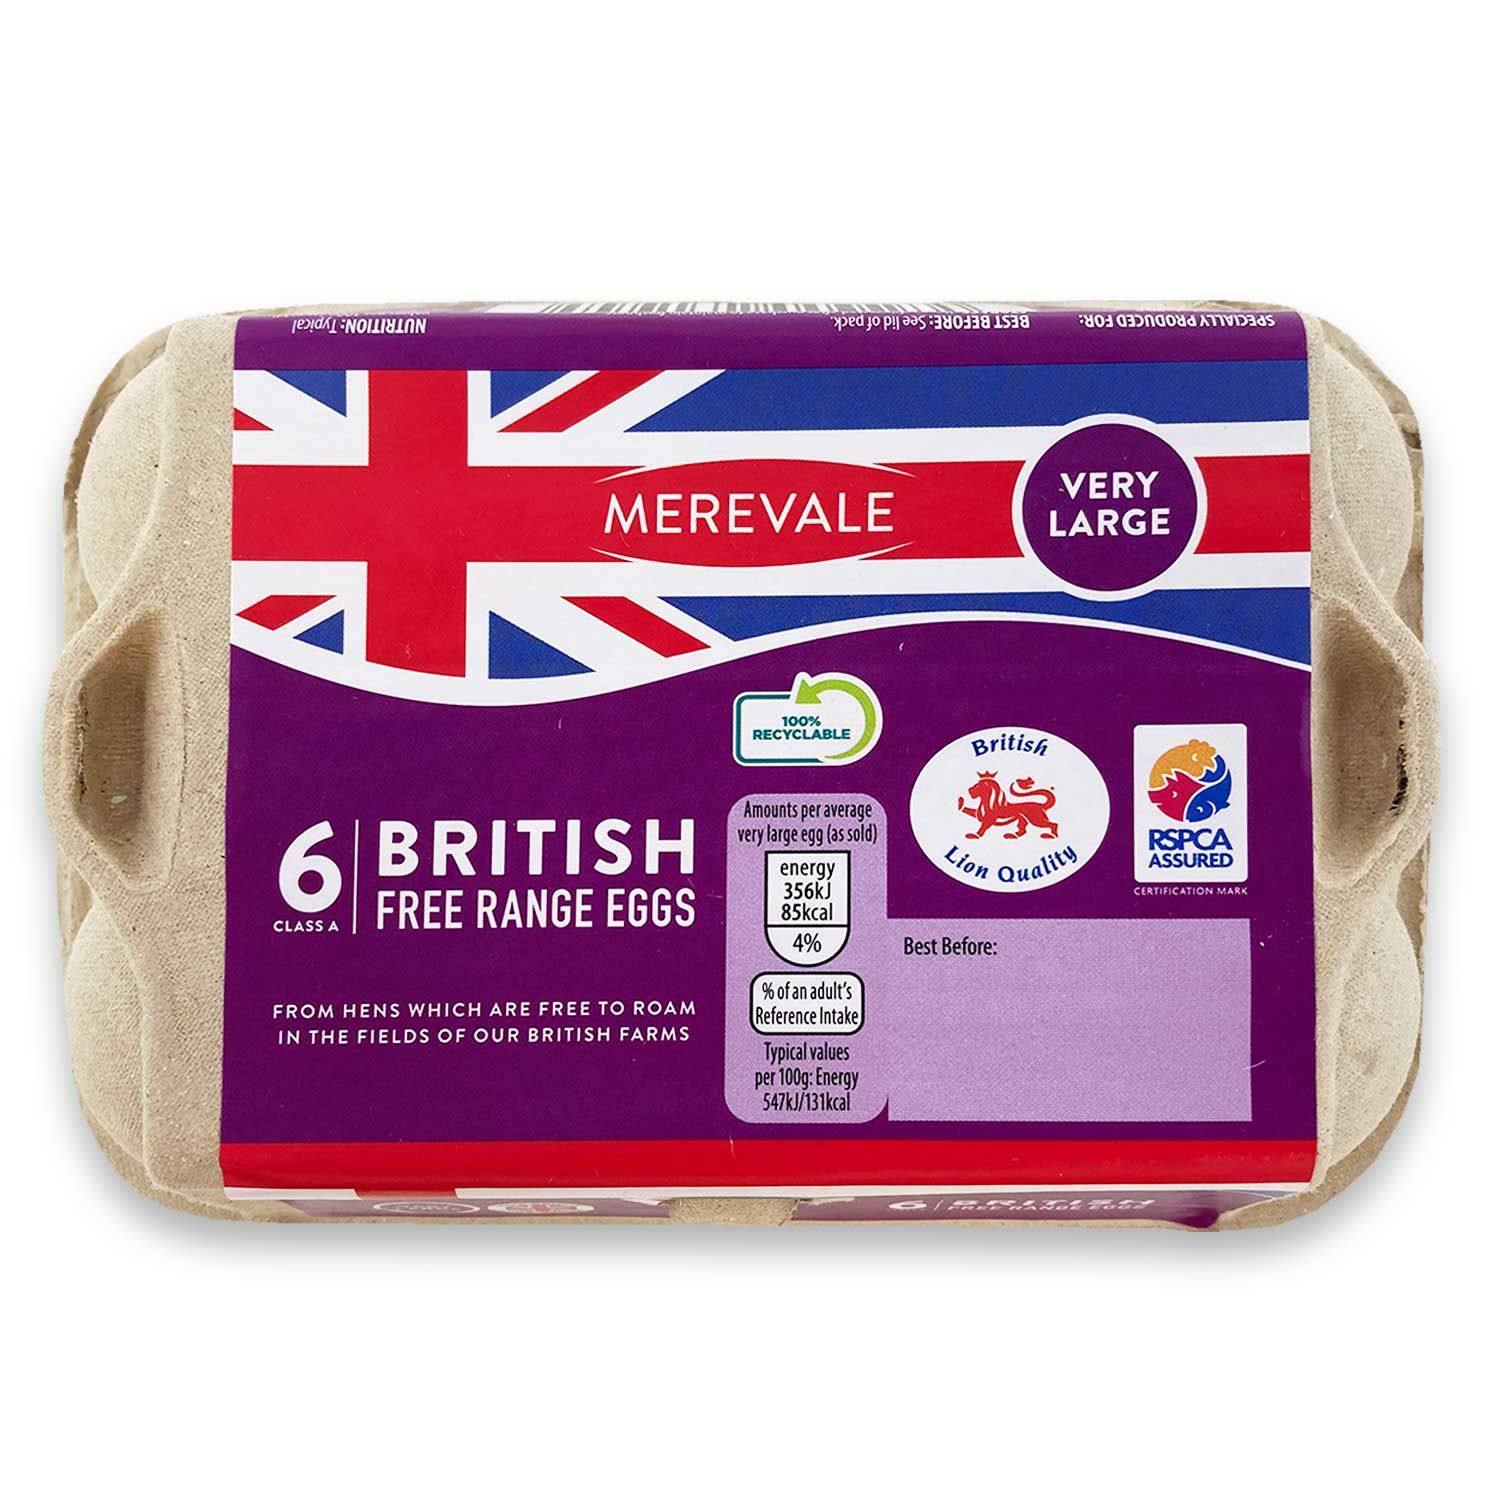 Merevale British Free Range Very Large Eggs 438g/6 Pack